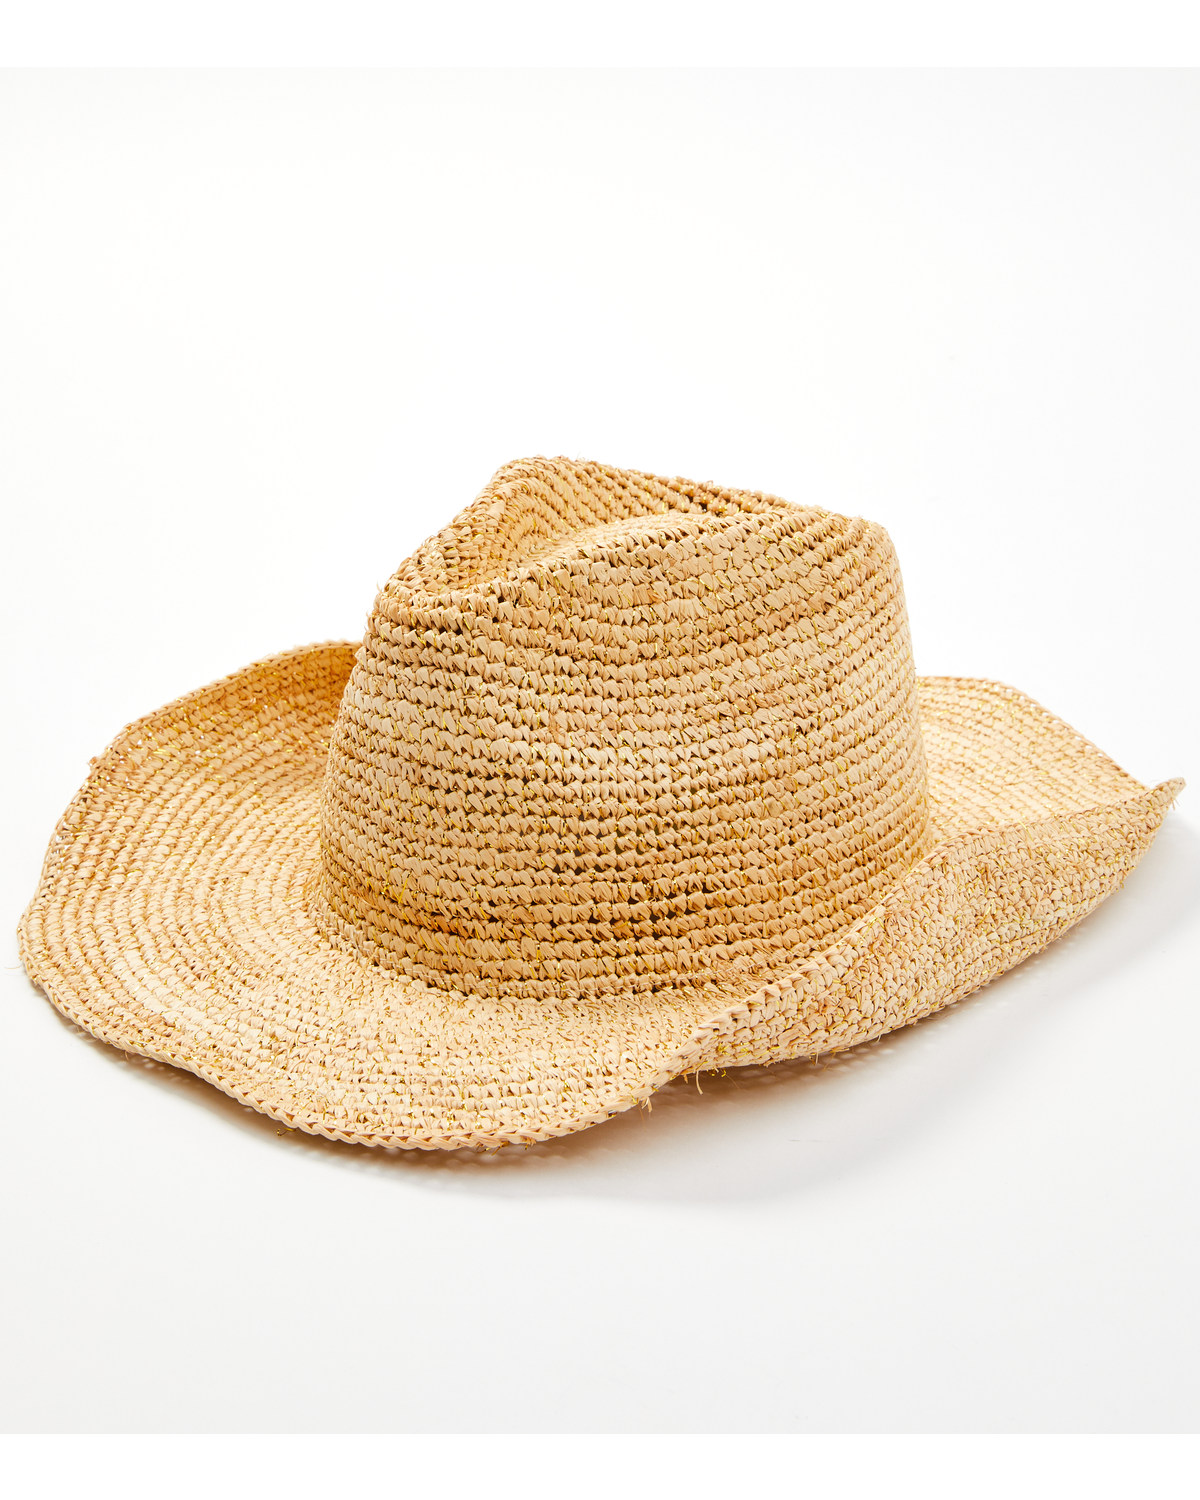 Nikki Beach Women's Carrera Straw Cowboy Hat